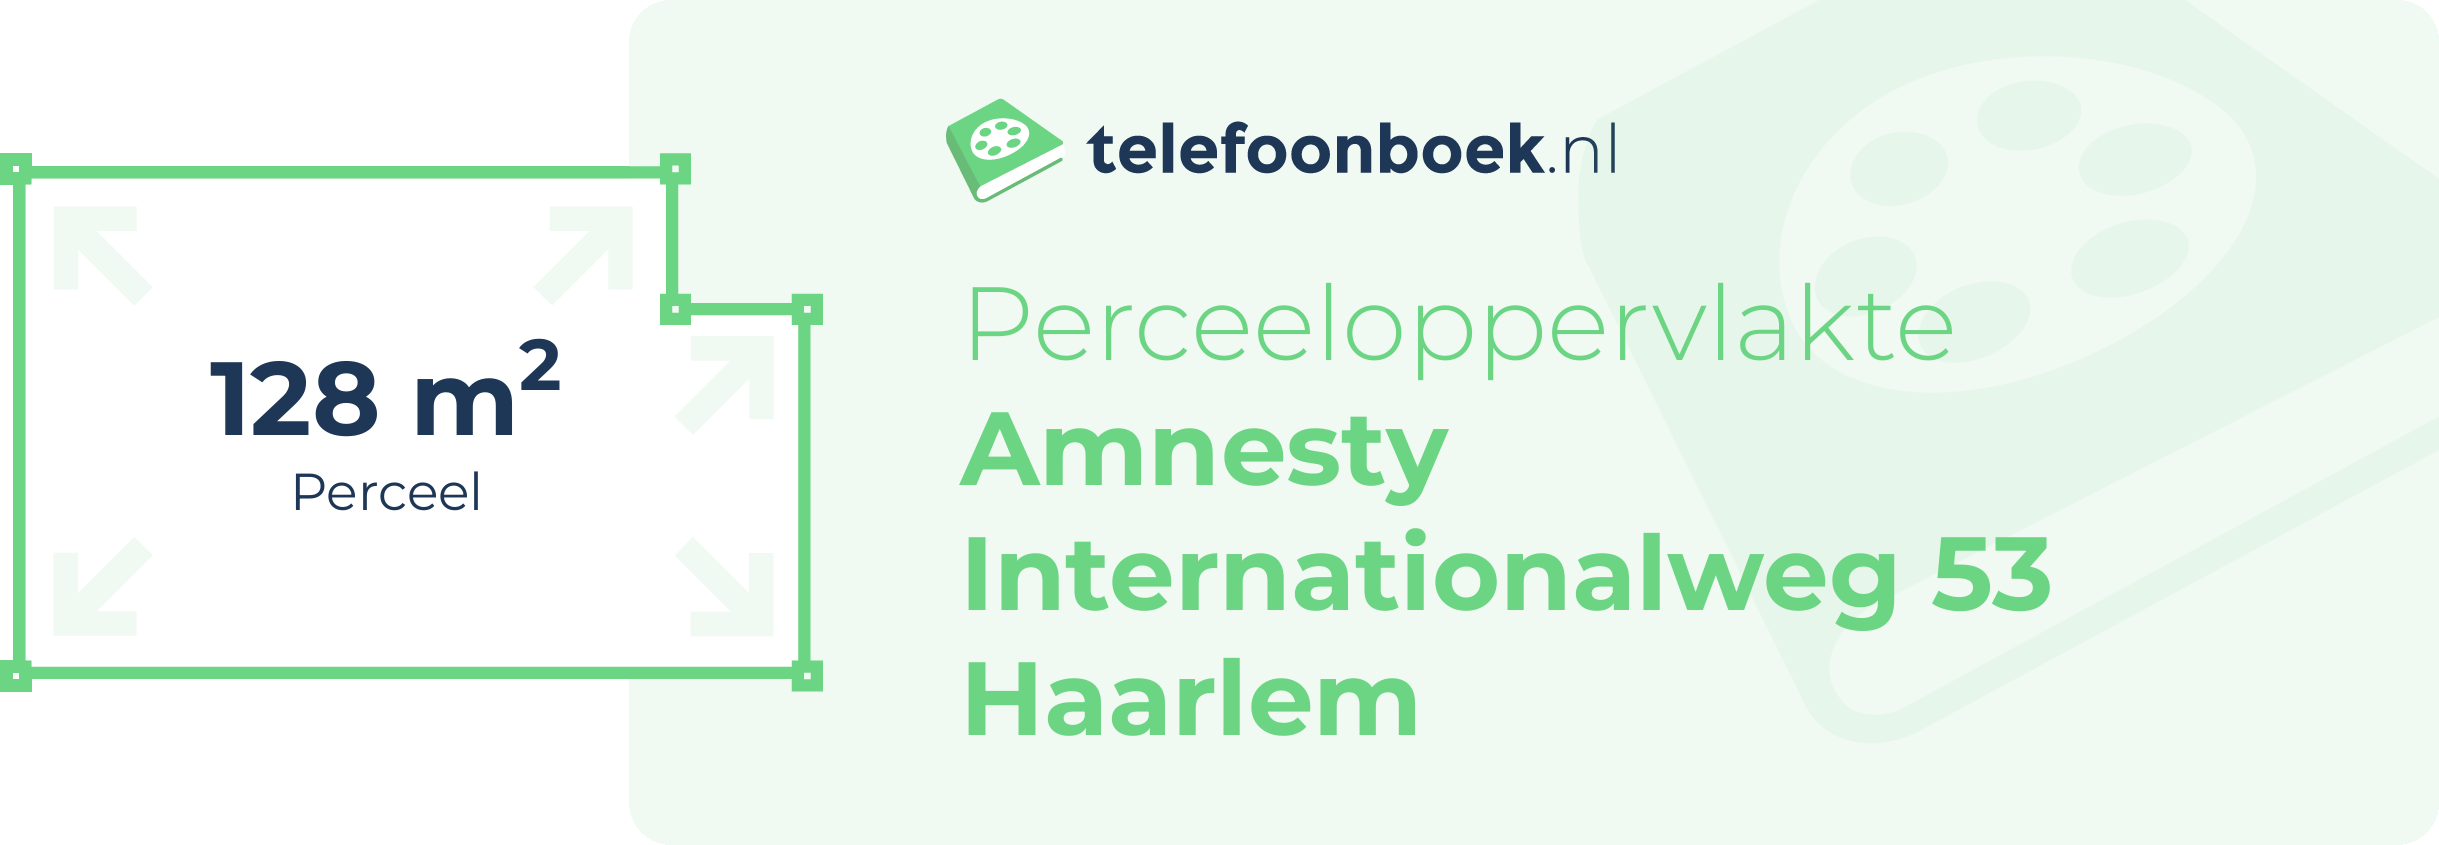 Perceeloppervlakte Amnesty Internationalweg 53 Haarlem